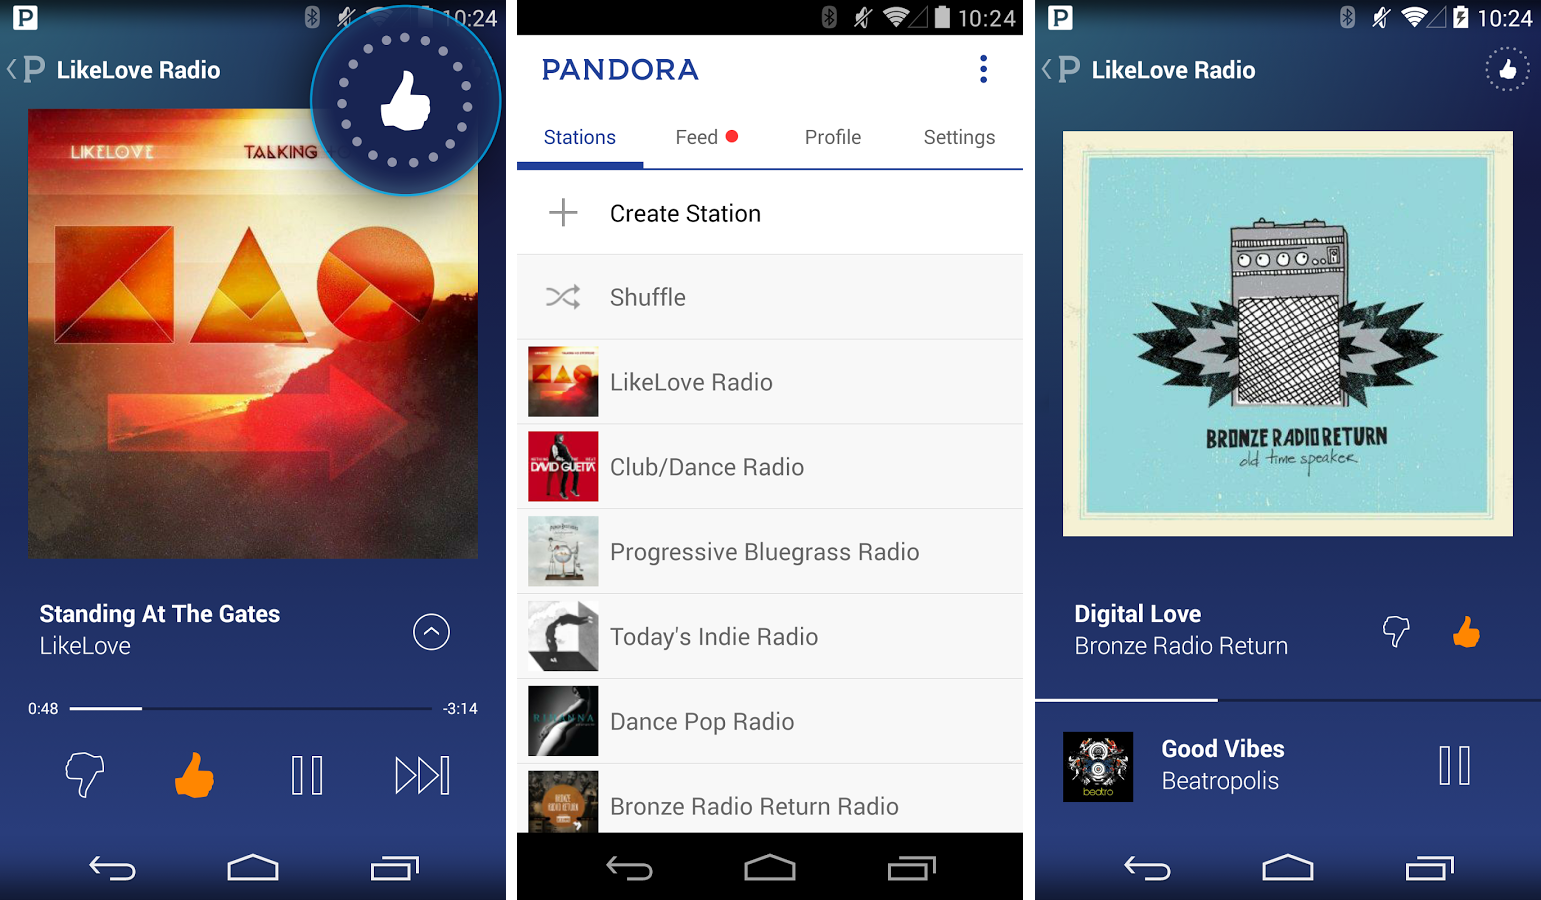 Pandora Acquiring Key Assets from Rdio